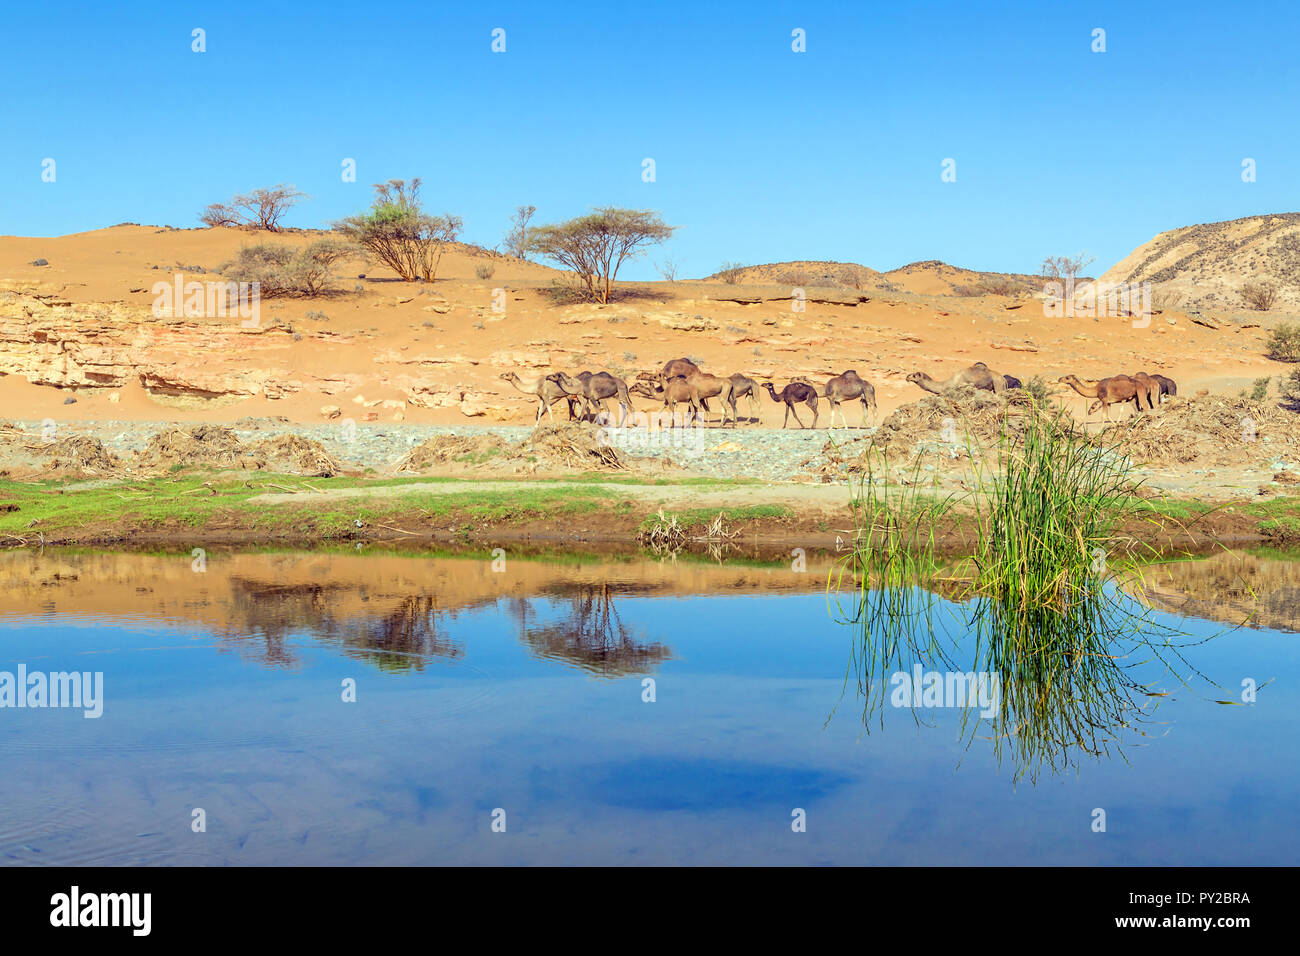 Camels in the desert near a waterhole, Saudi Arabia Stock Photo